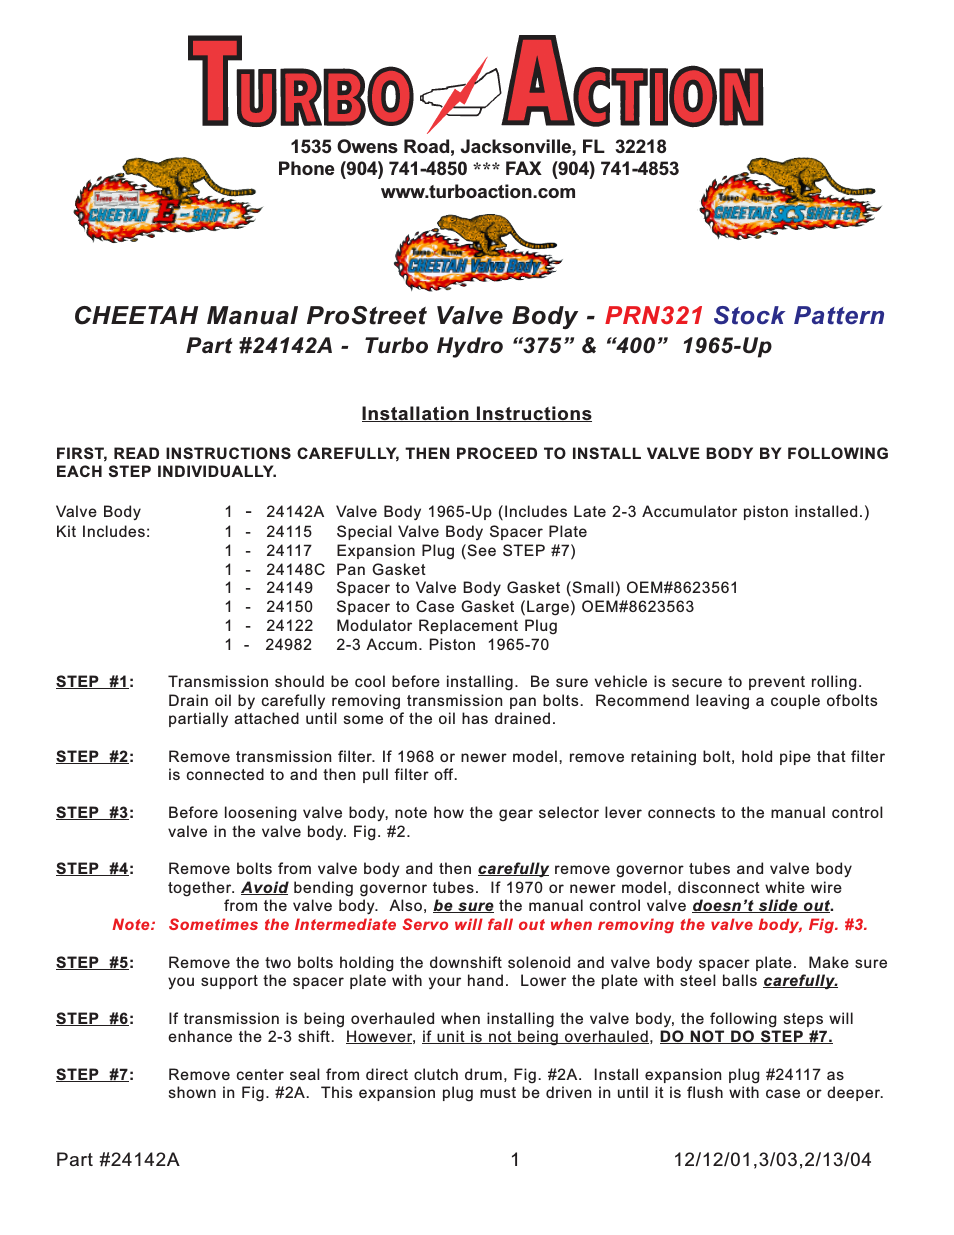 24142A  Turbo Hydro 400 Pro Street Manual Valve Body (PRN321)